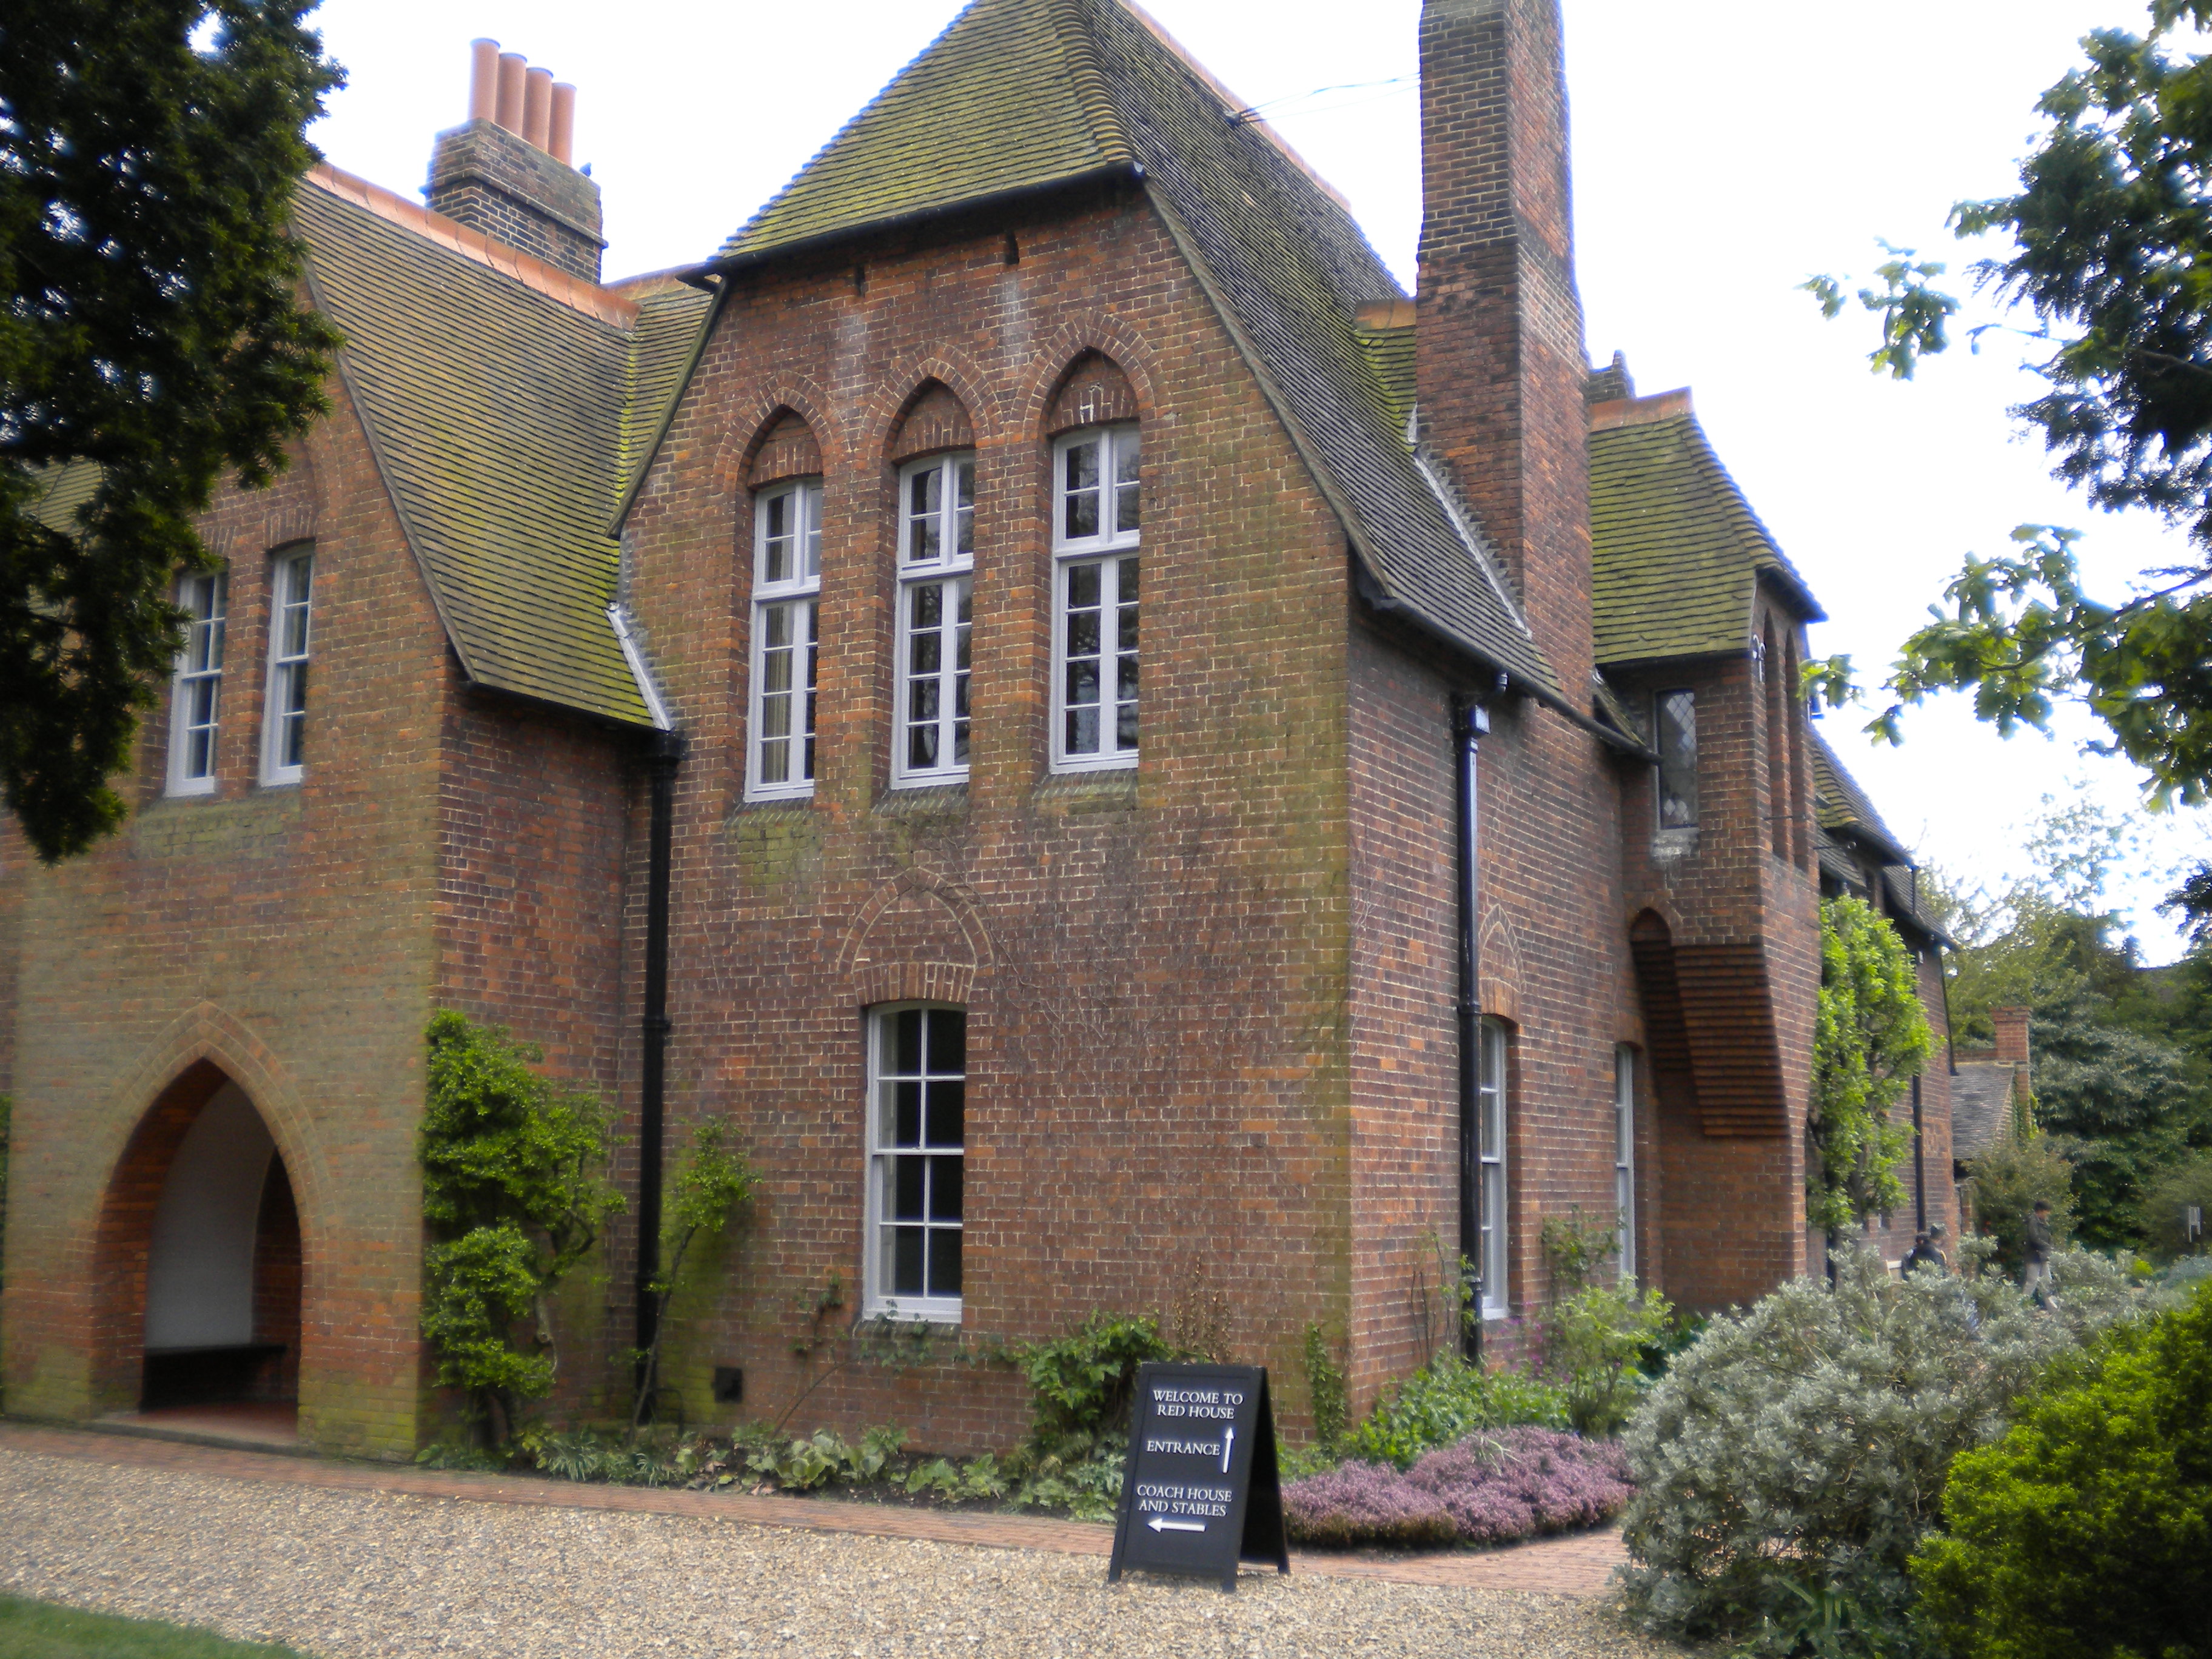 William Morris' Red House & Garden.